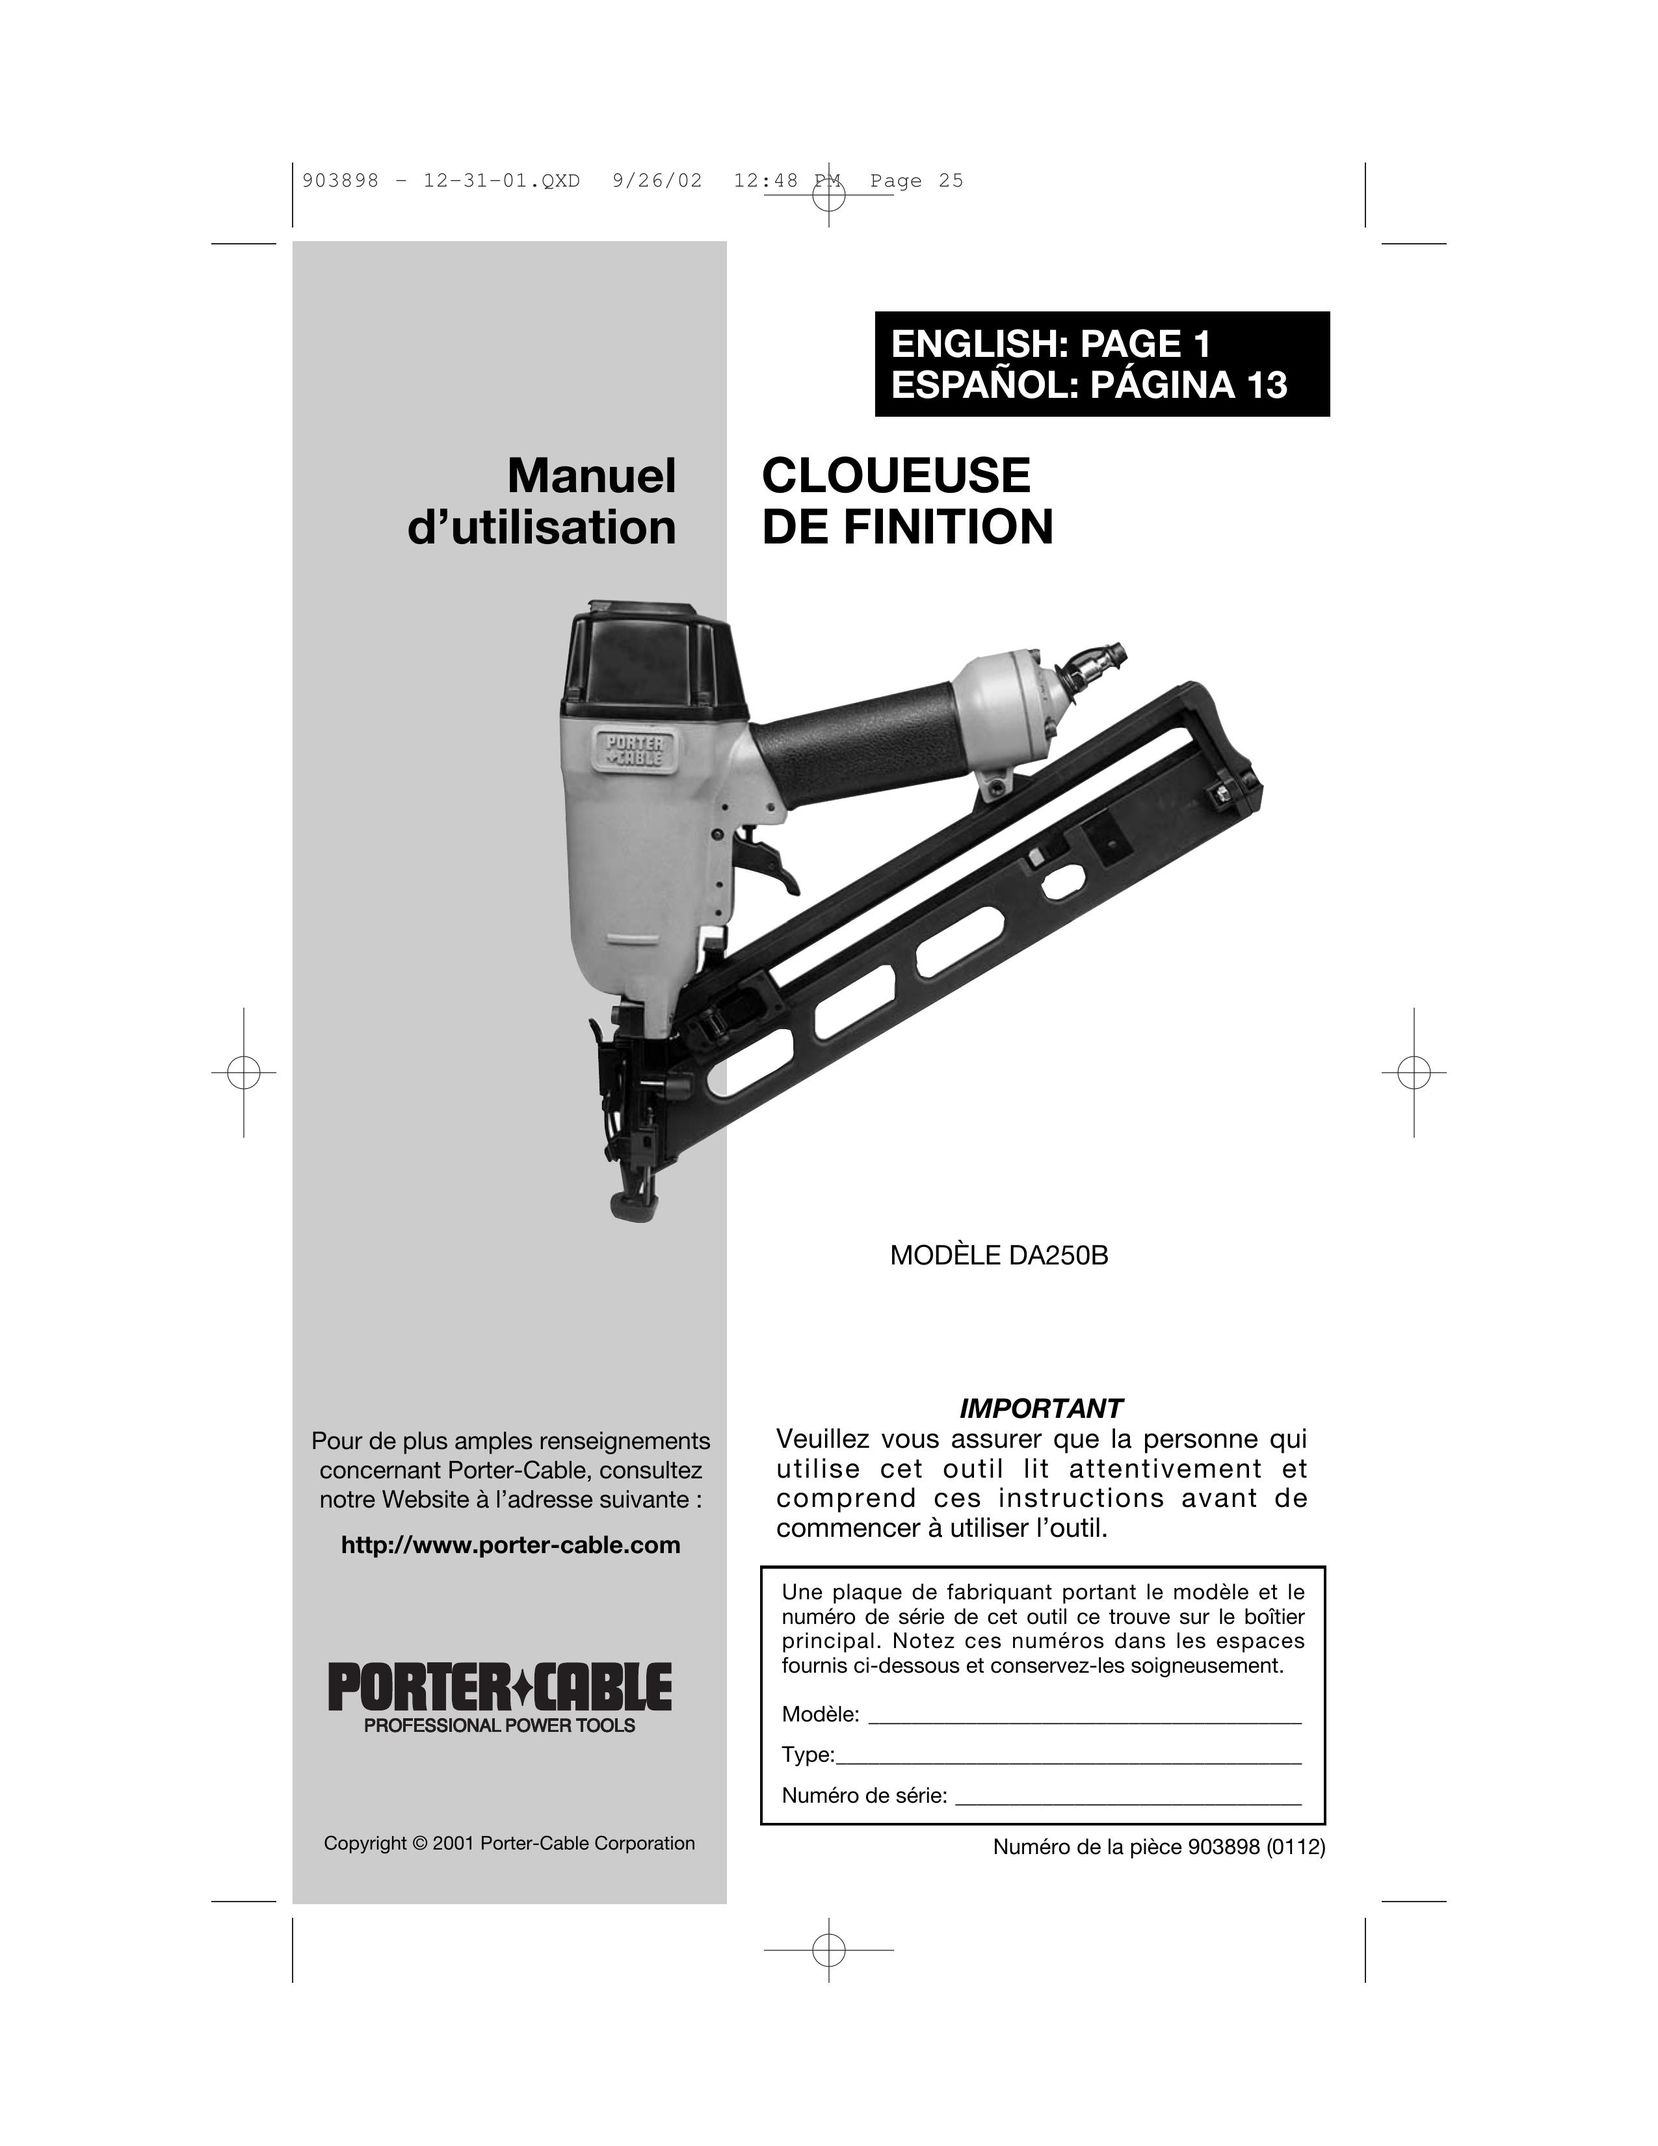 Porter-Cable DA250B Nail Gun User Manual